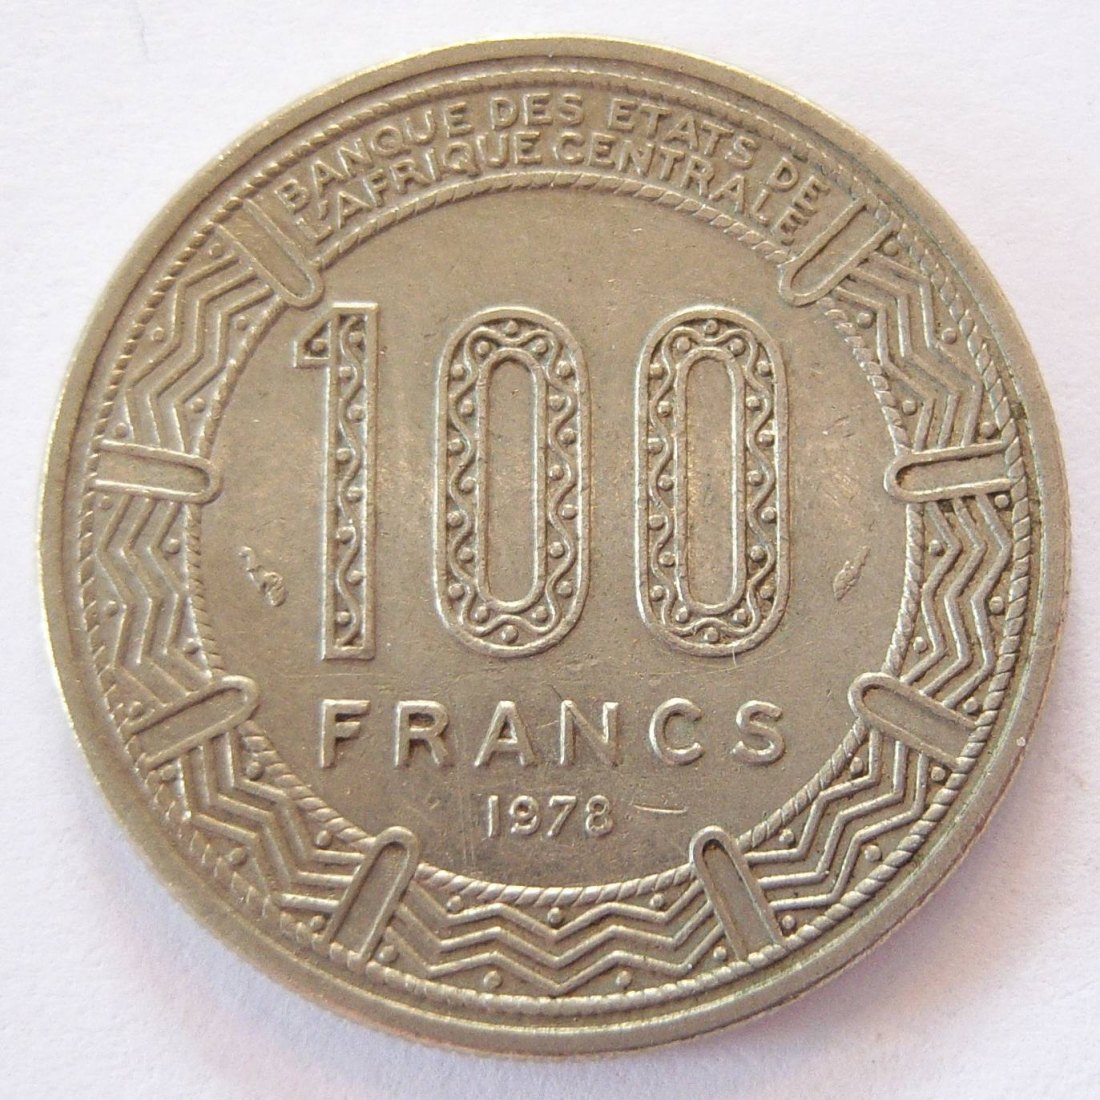  RARITÄT !! Zentralafrikanische Republik 100 Francs 1978 !! SEHR SELTEN !!   